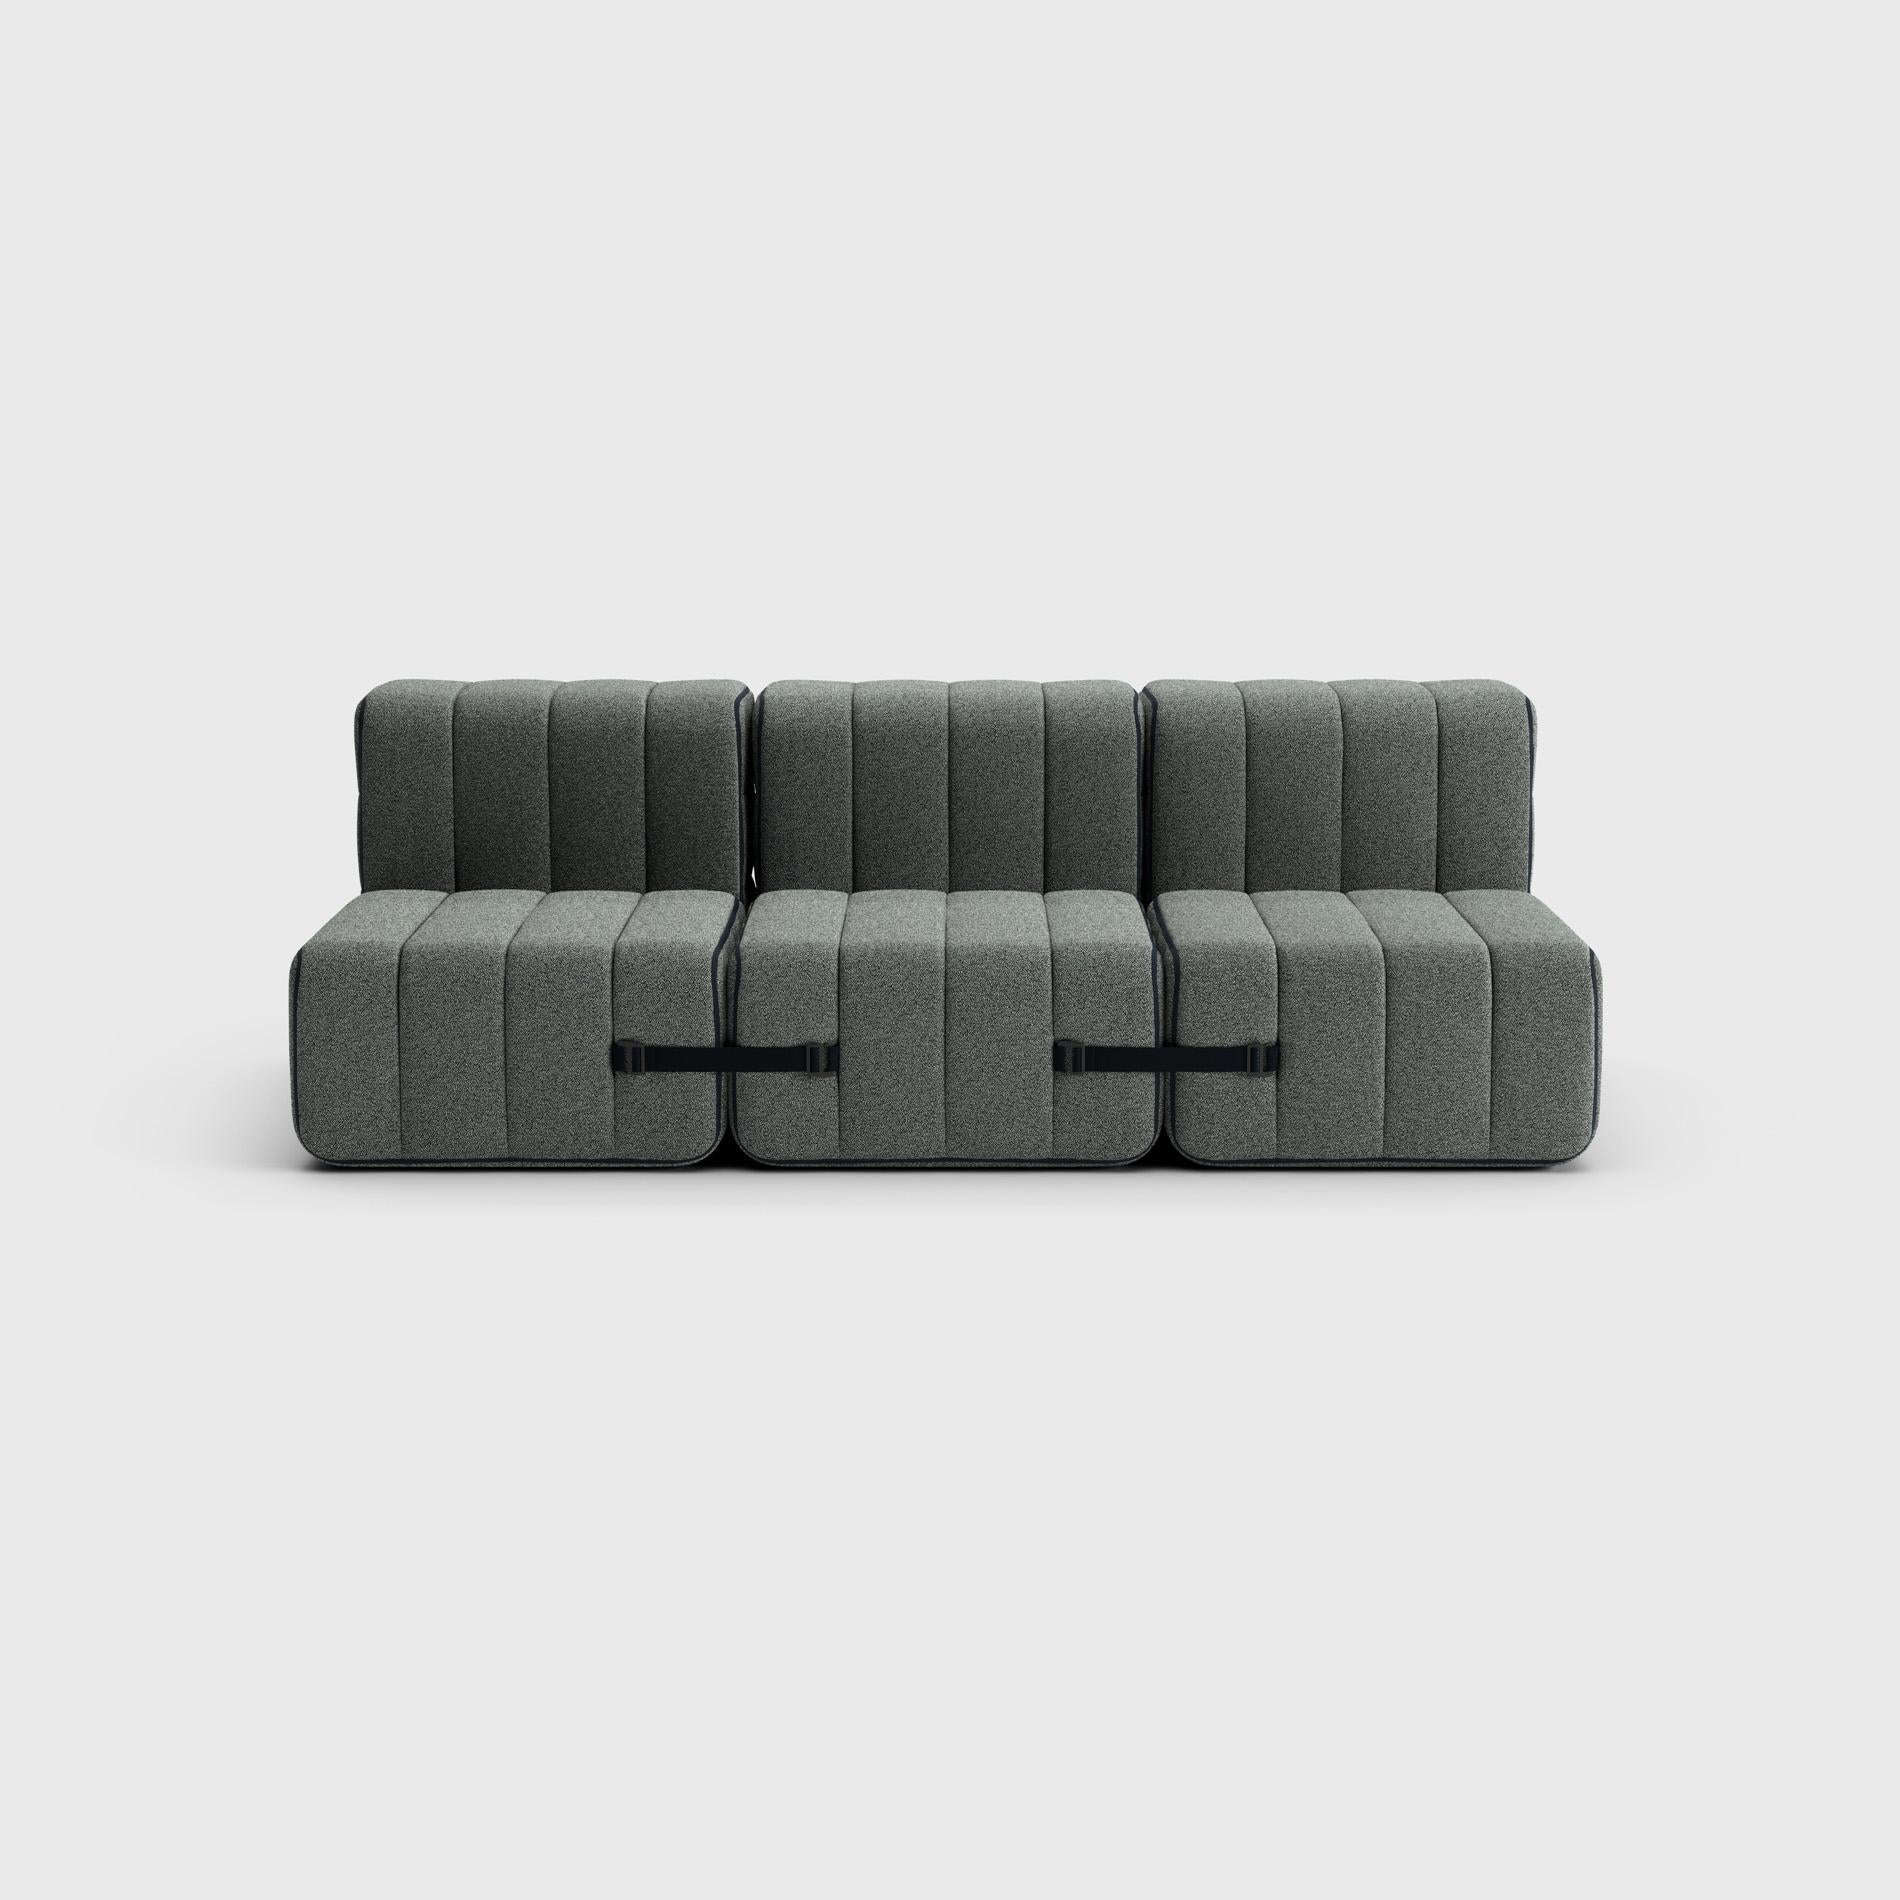 German Curt Single Module, Fabric Sera 'Gravel Grey', Curt Modular Sofa System For Sale